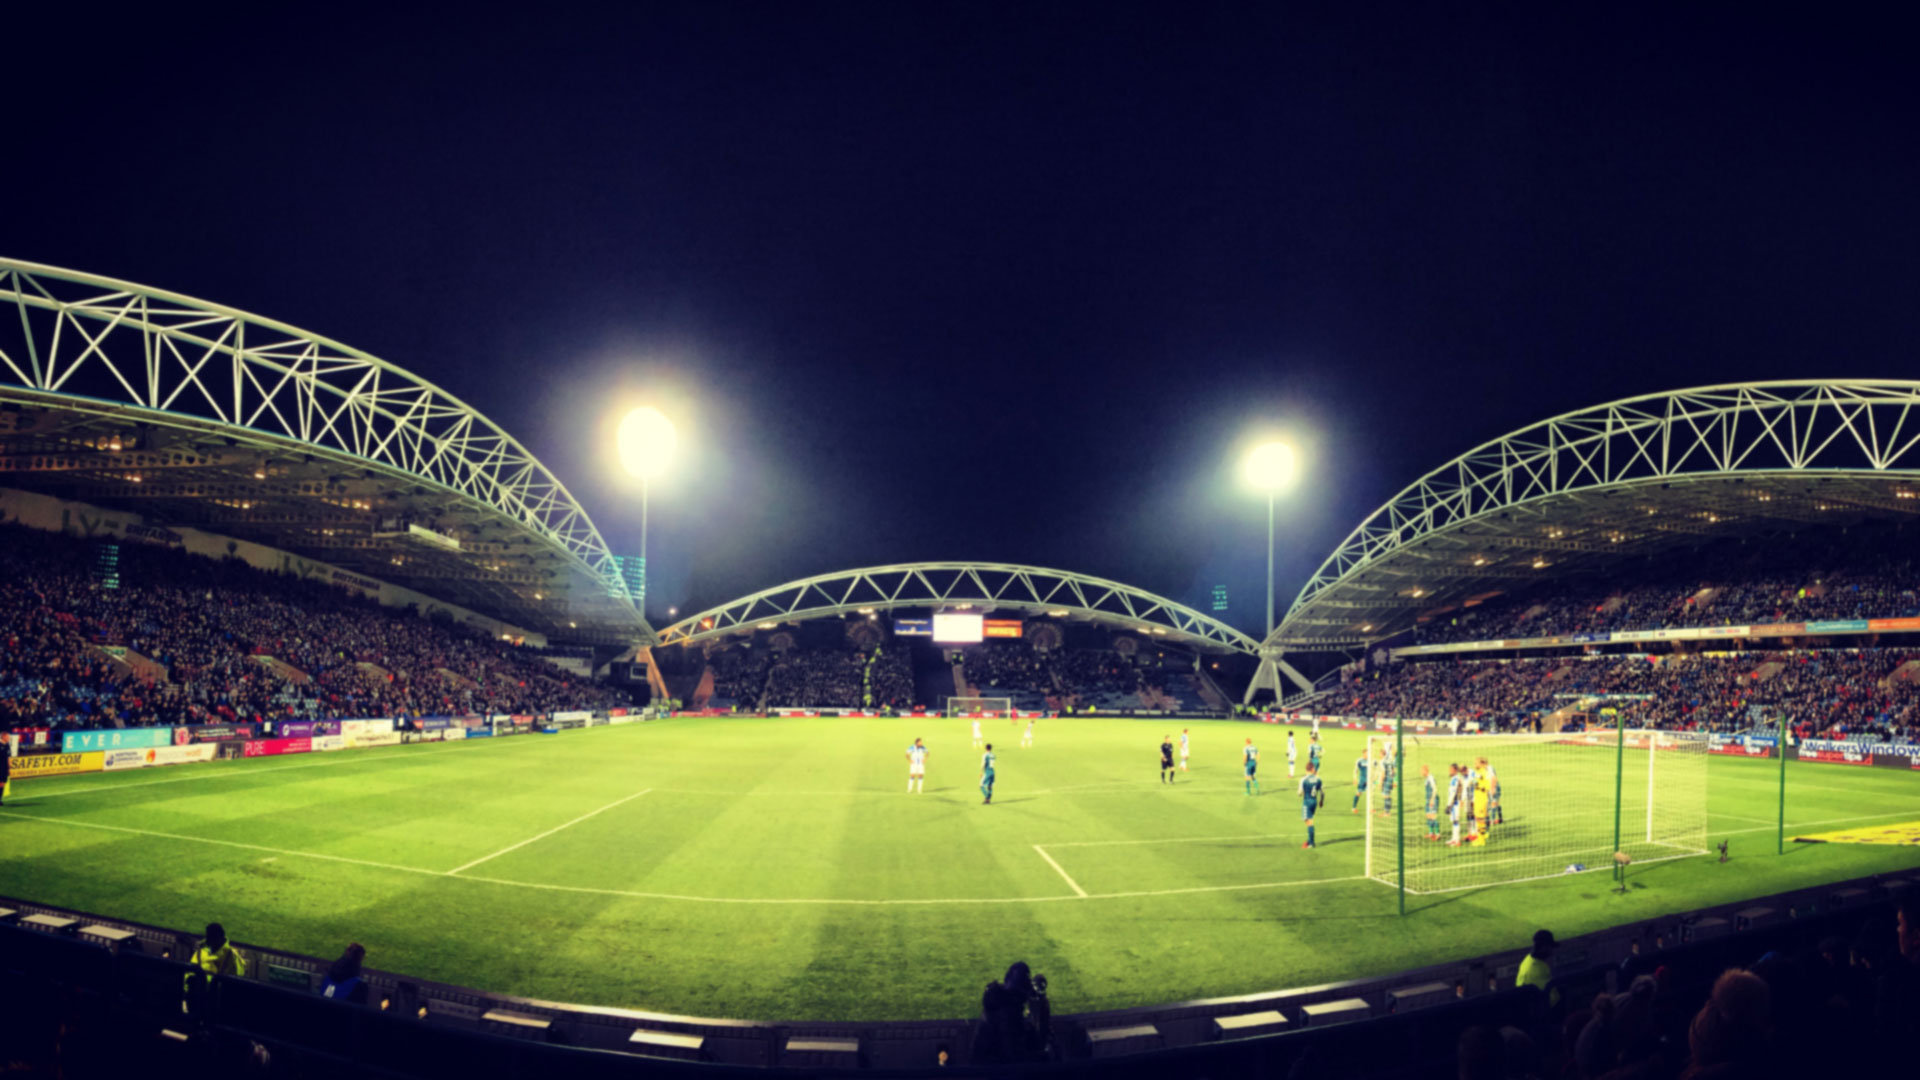 The John Smith's Stadium pitch at night